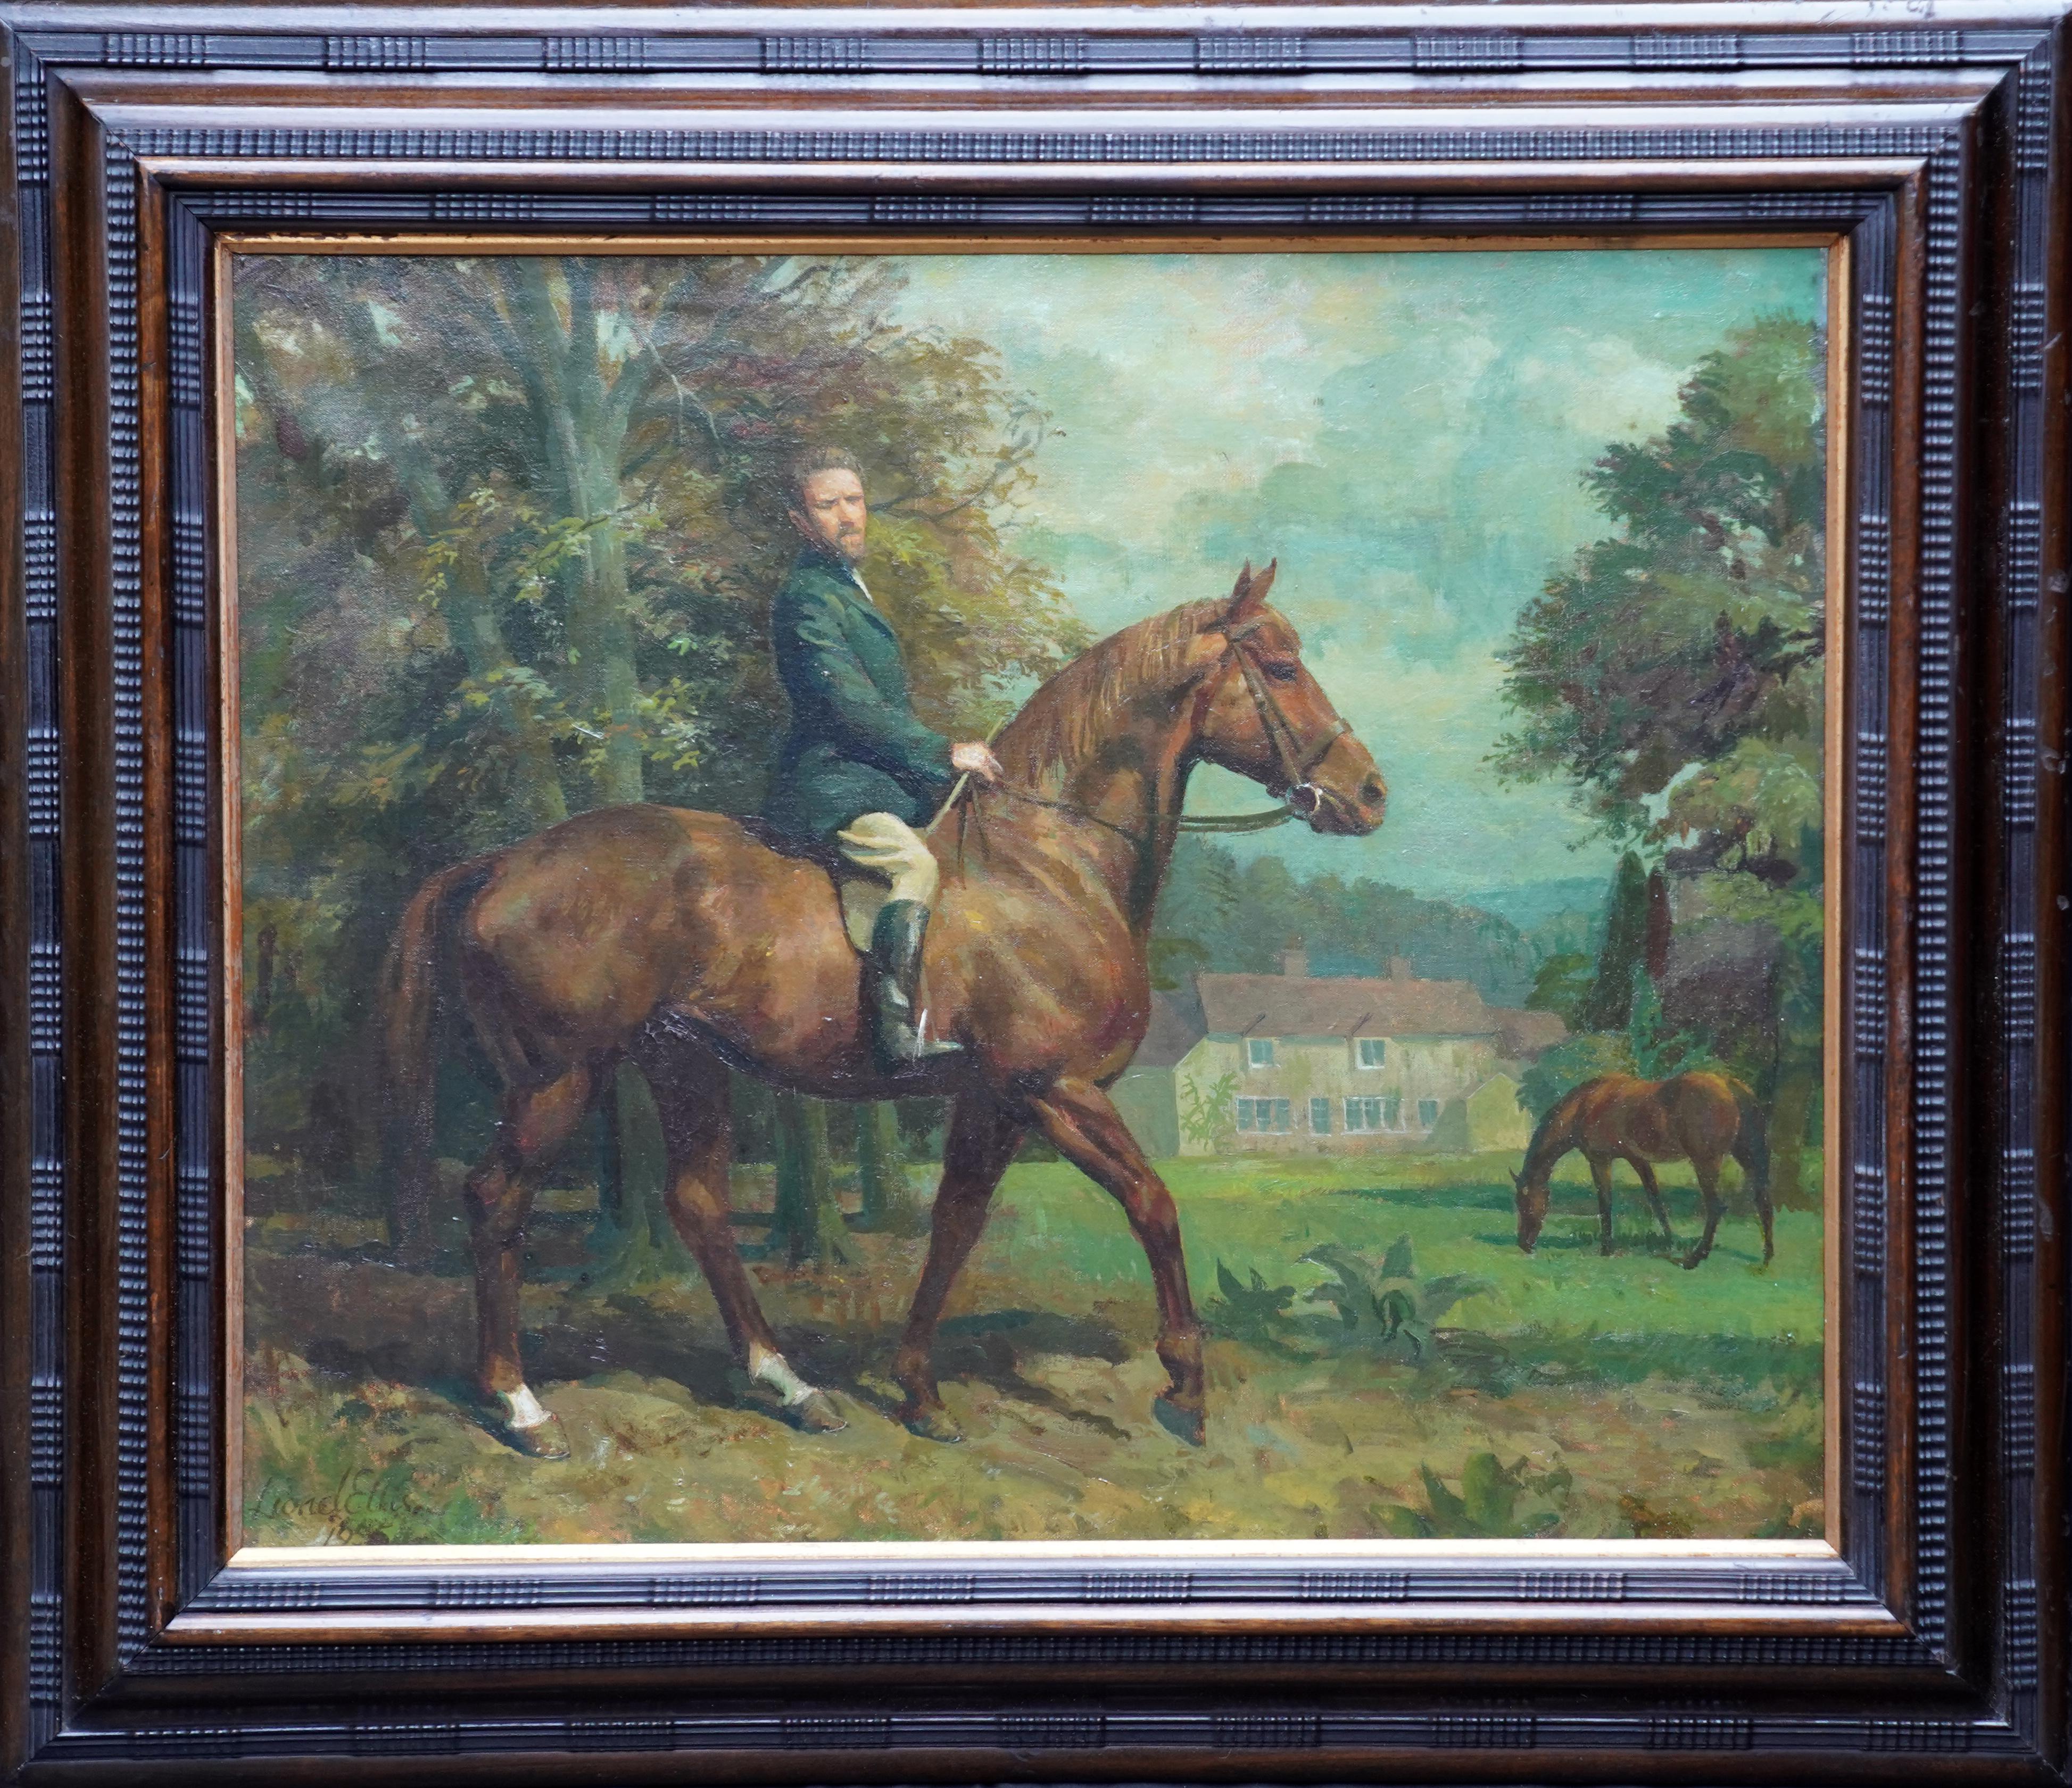 Lionel Ellis Animal Painting - Self Portrait on Horse in Landscape - British 50's art equine rider oil painting